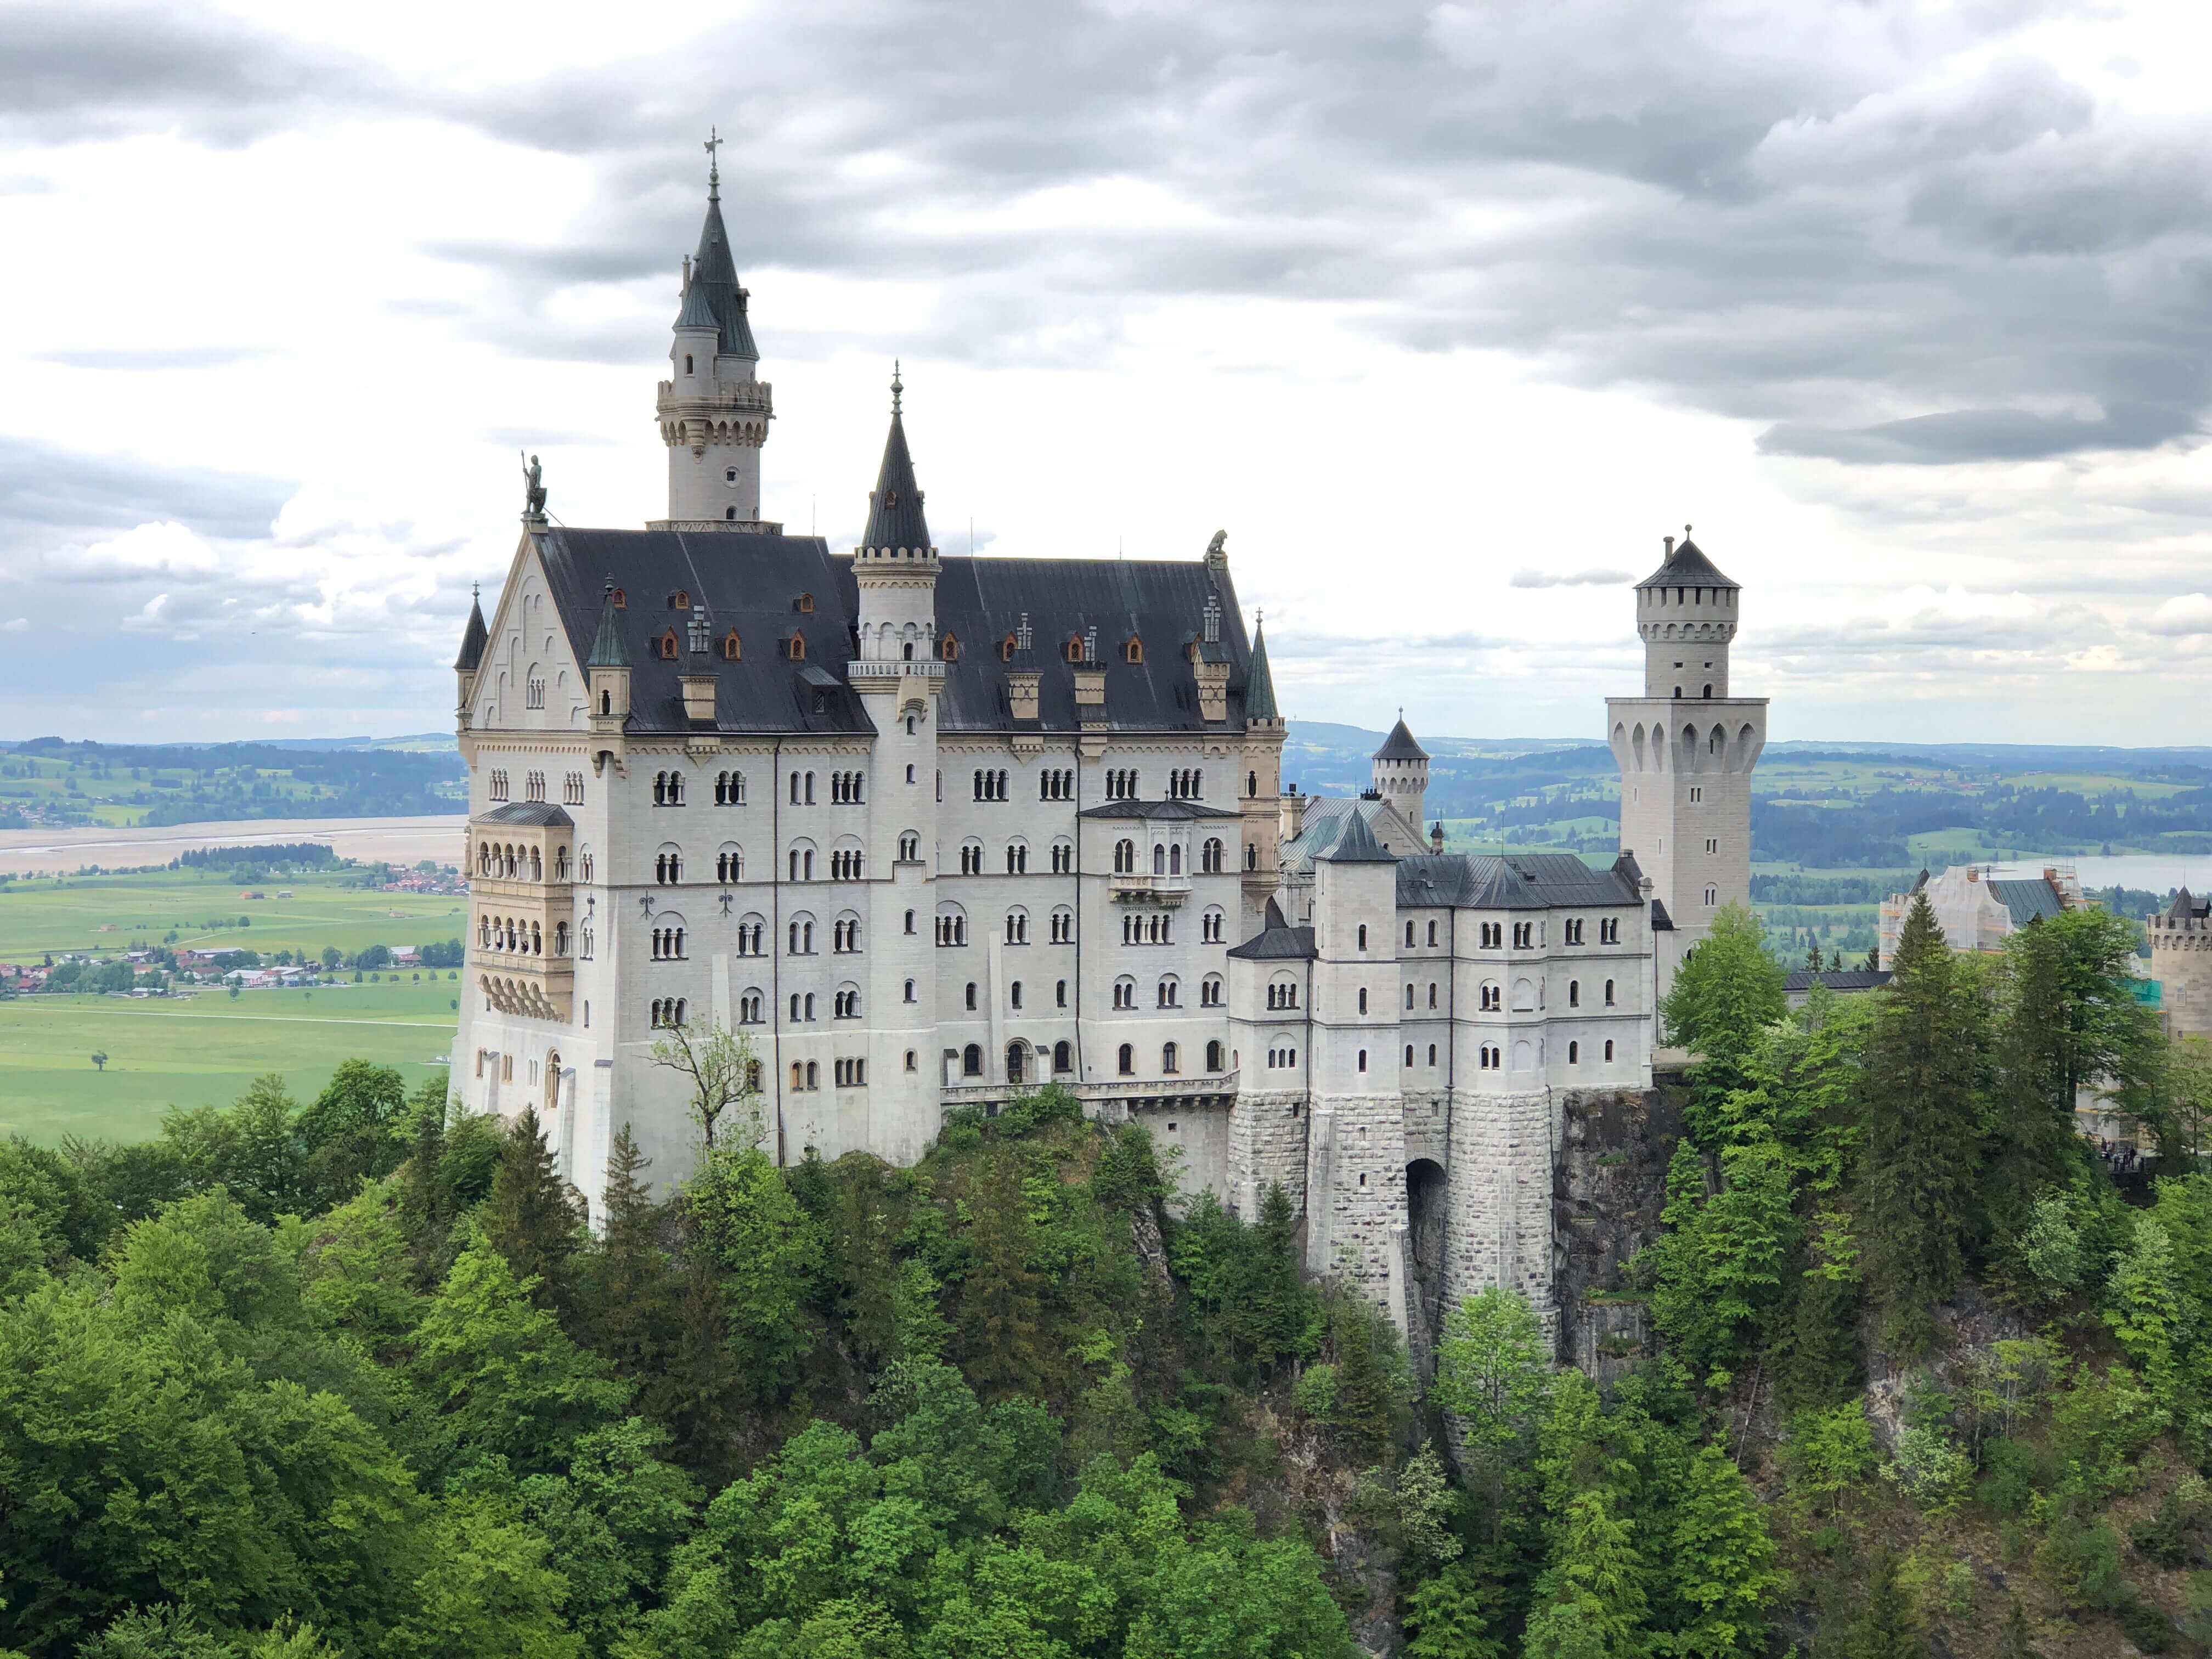 Германия — замок Нойшванштайн, Леголэнд и прочие прелести. | valia.life